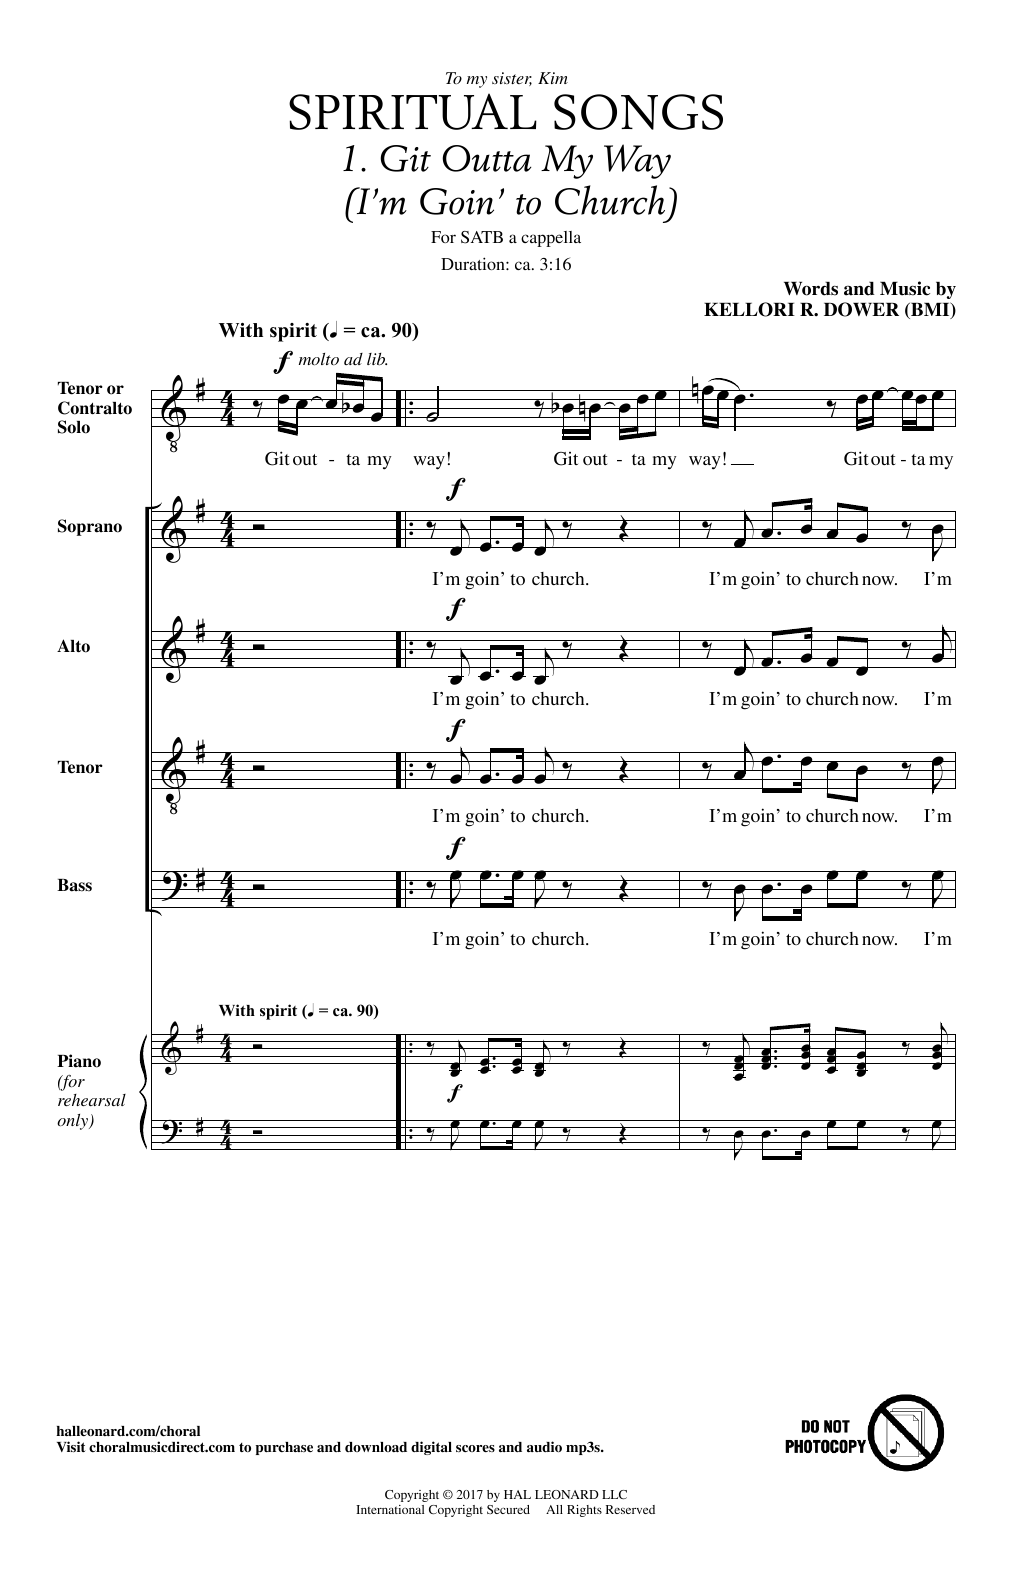 Kellori R. Dower Spiritual Songs Sheet Music Notes & Chords for SATB - Download or Print PDF